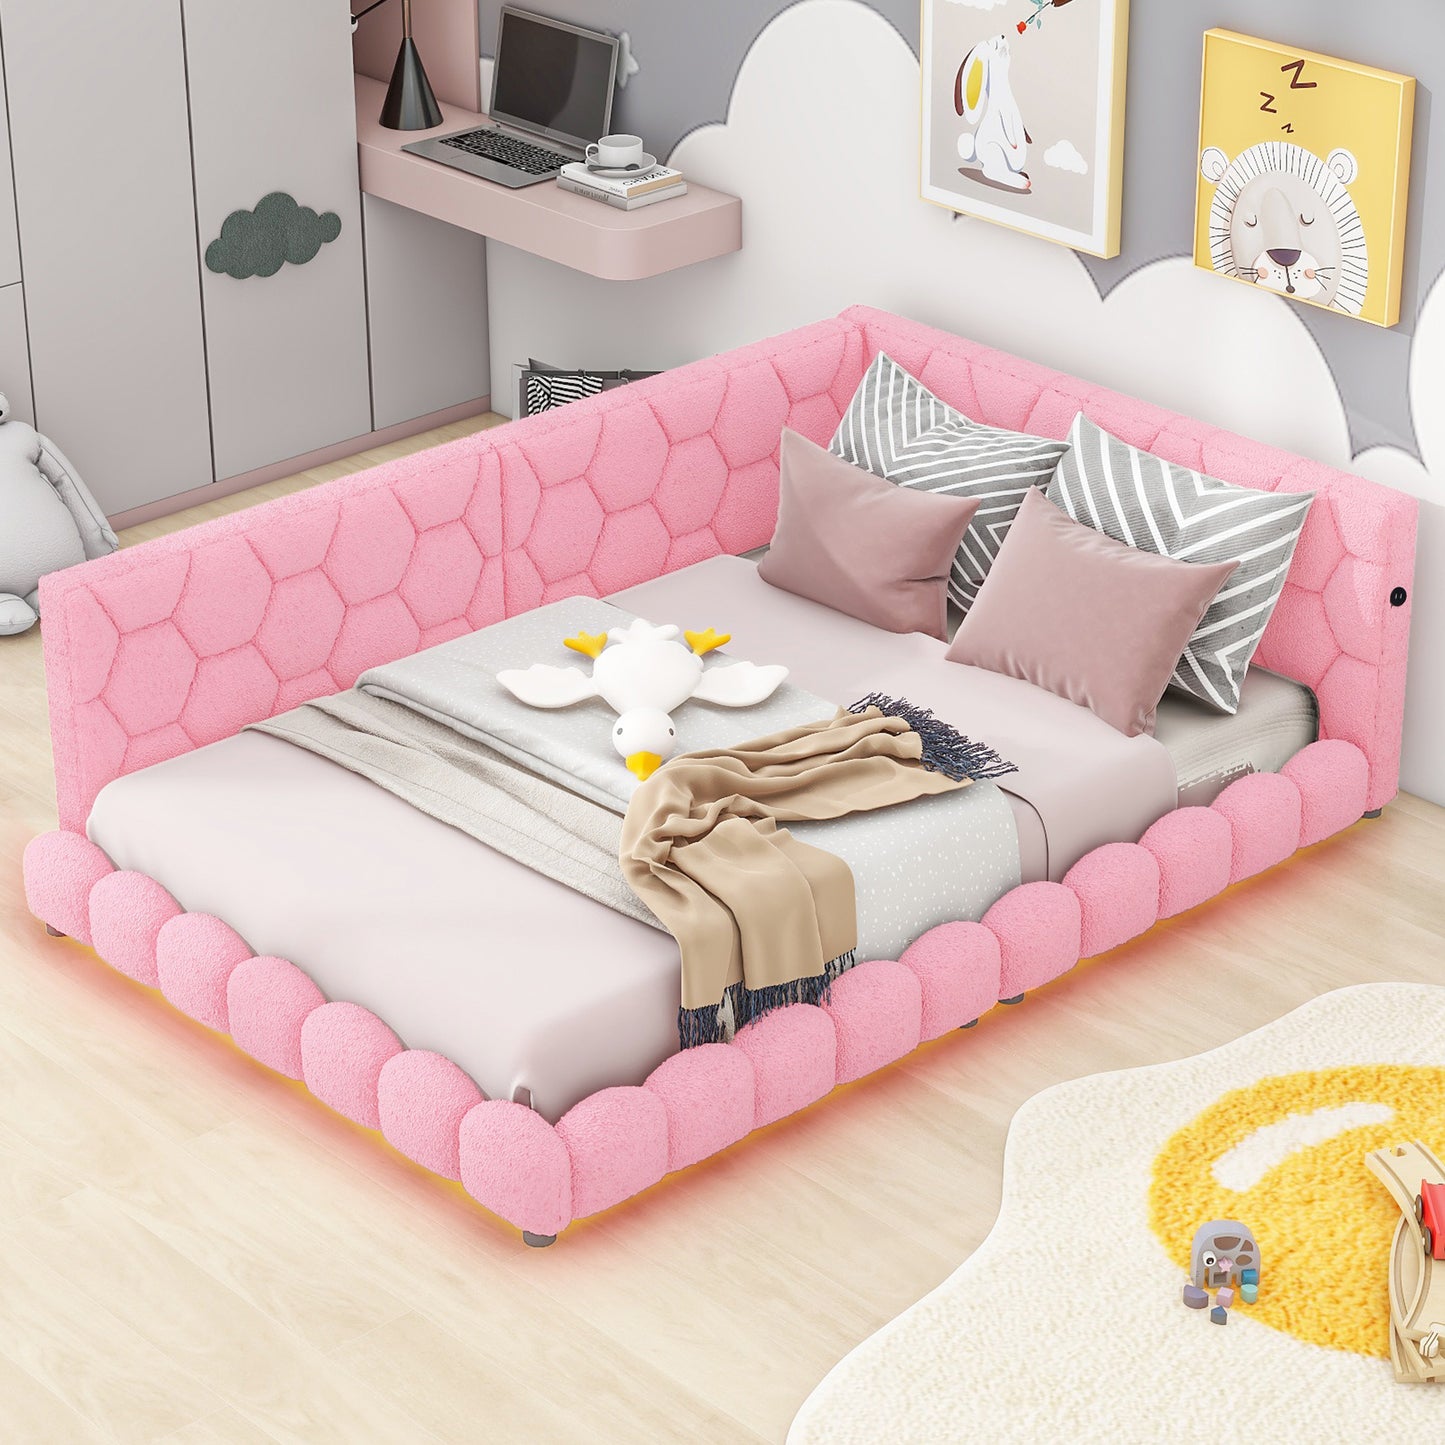 Upholstered Full Size platform bed with USB Ports and LED belt, Pink